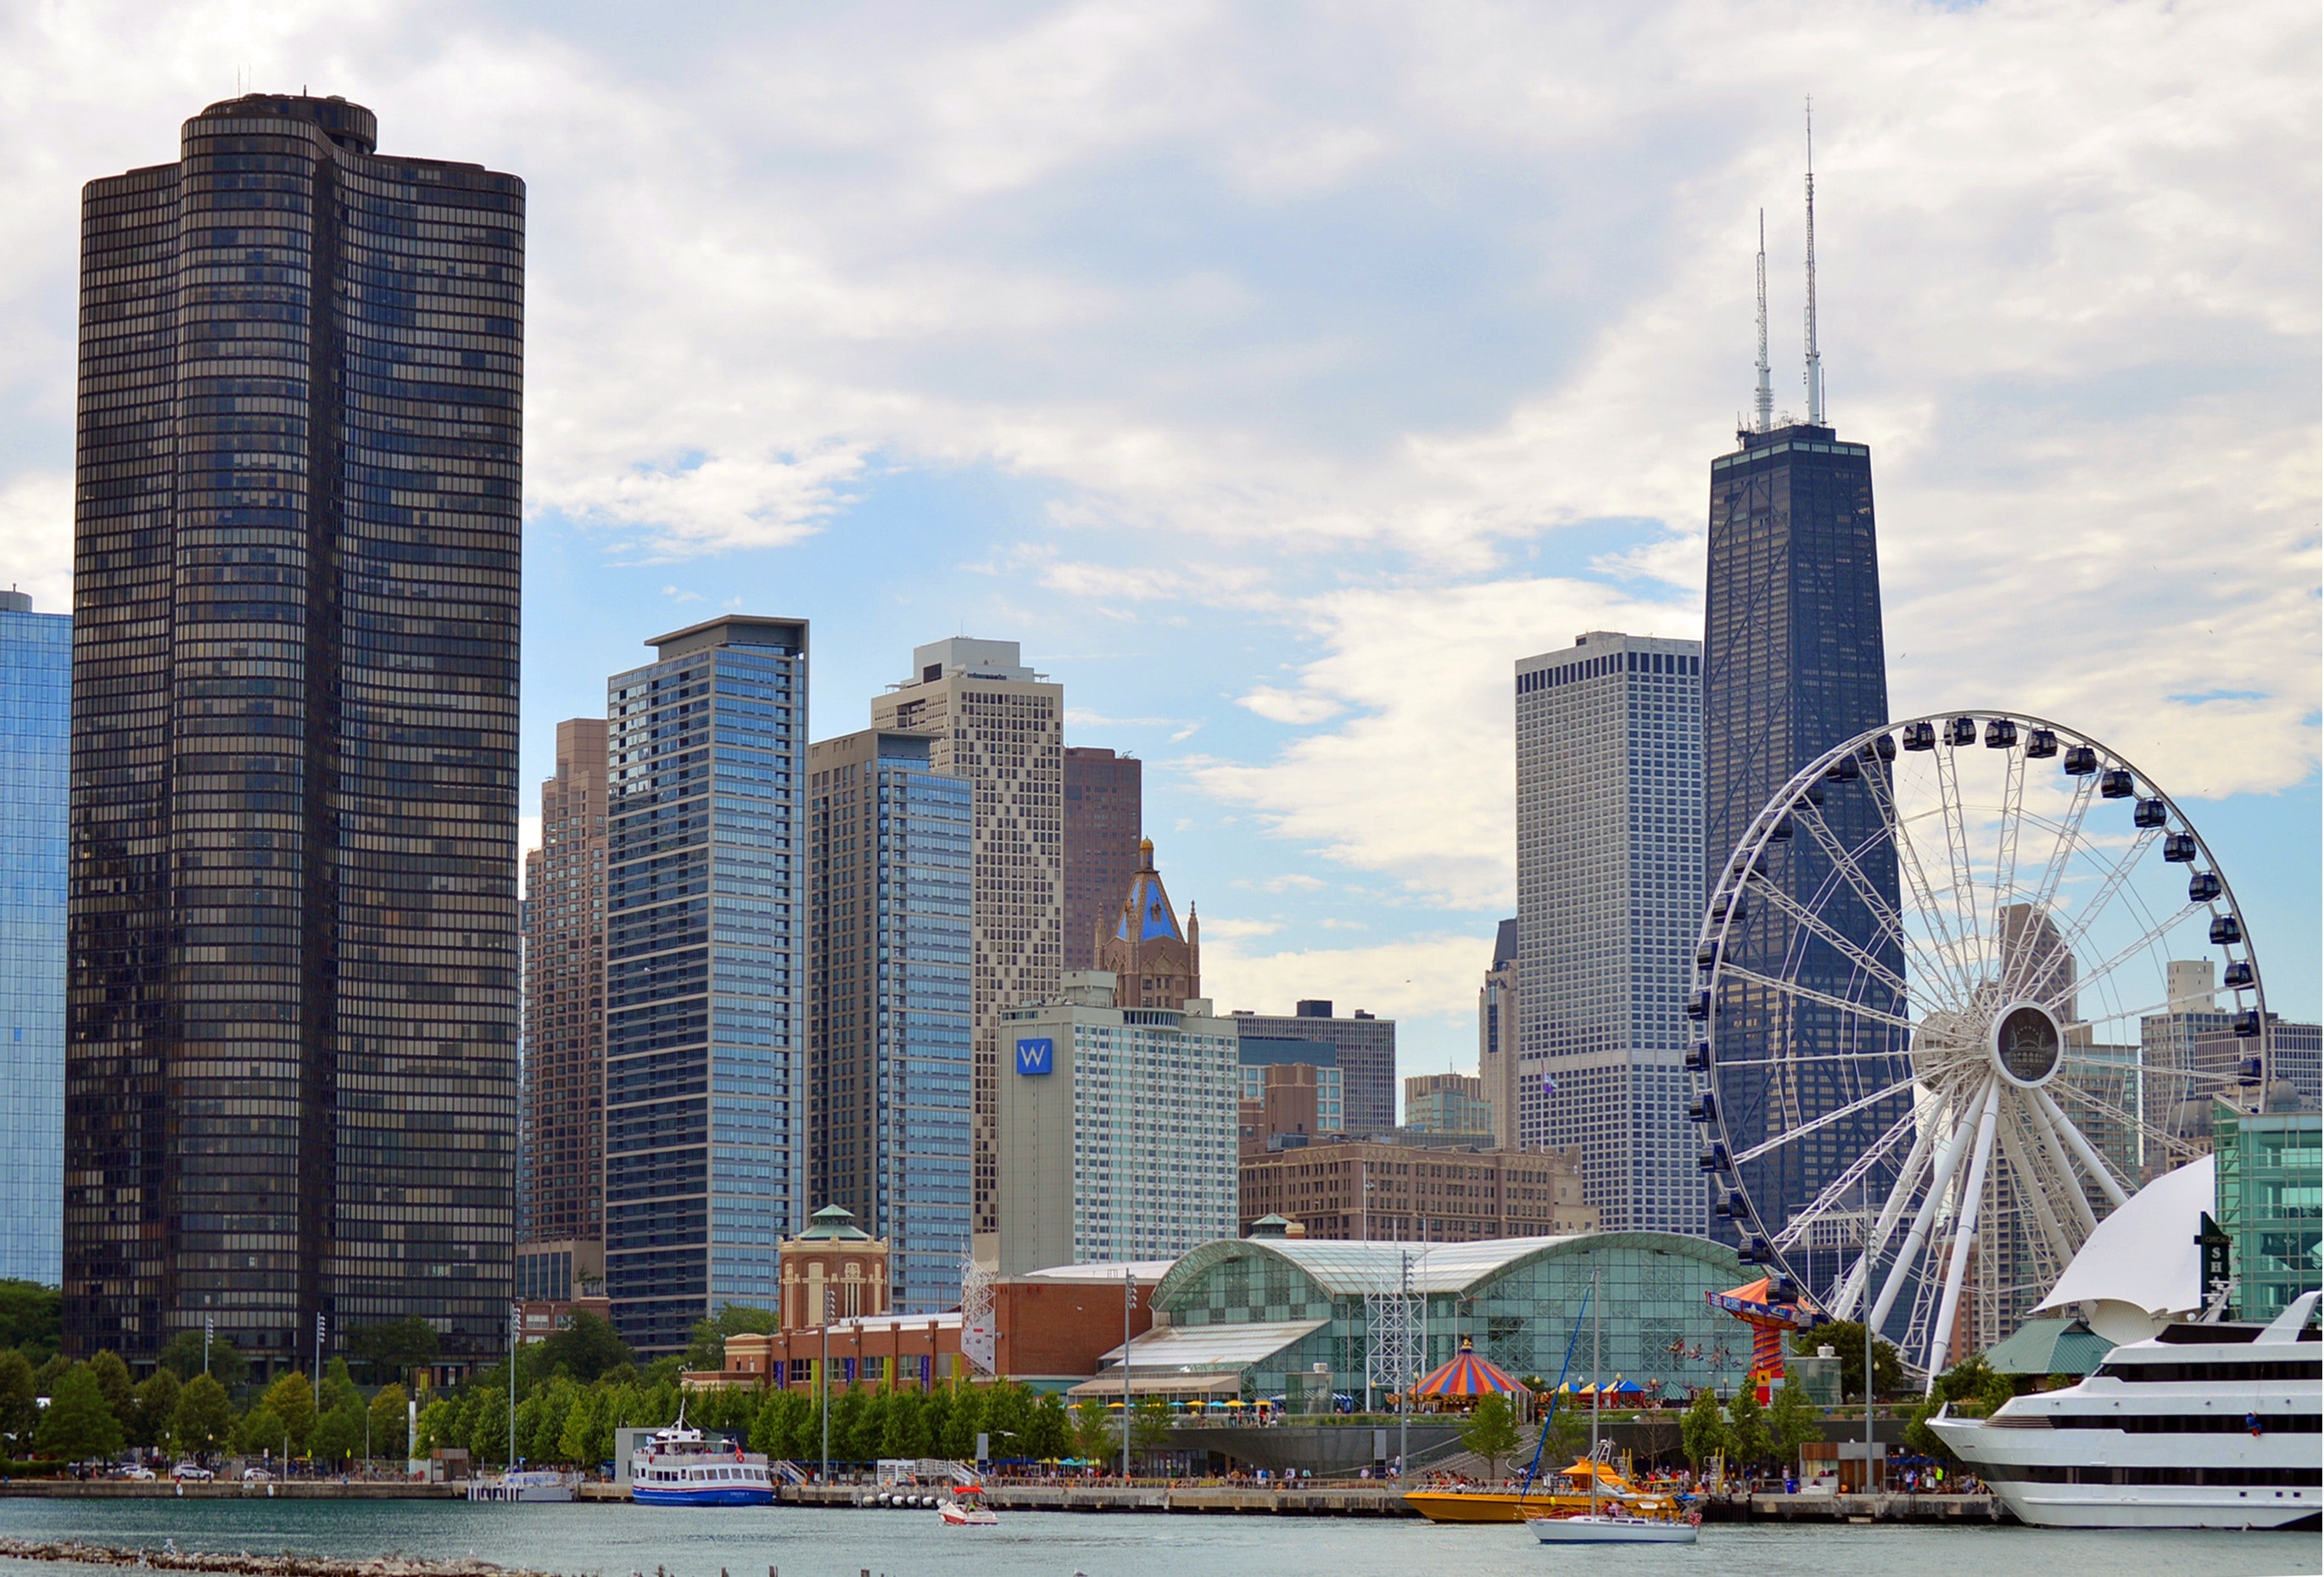 Chicago Cityscape - Navy Pier